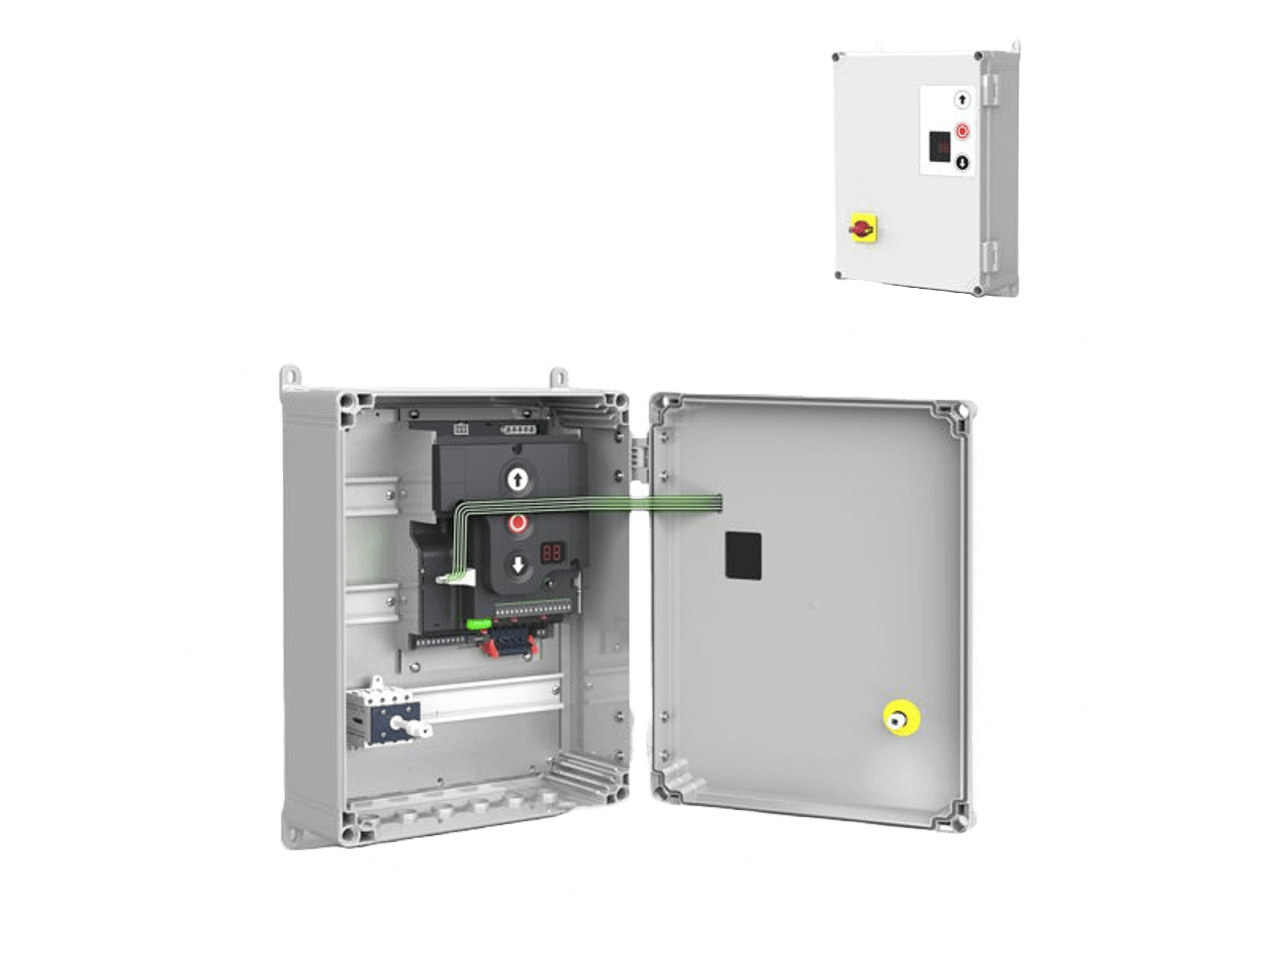 GfA Elektromaten Door Control TS 971 XL Plastic Housing with Mains Switch 3N~400V